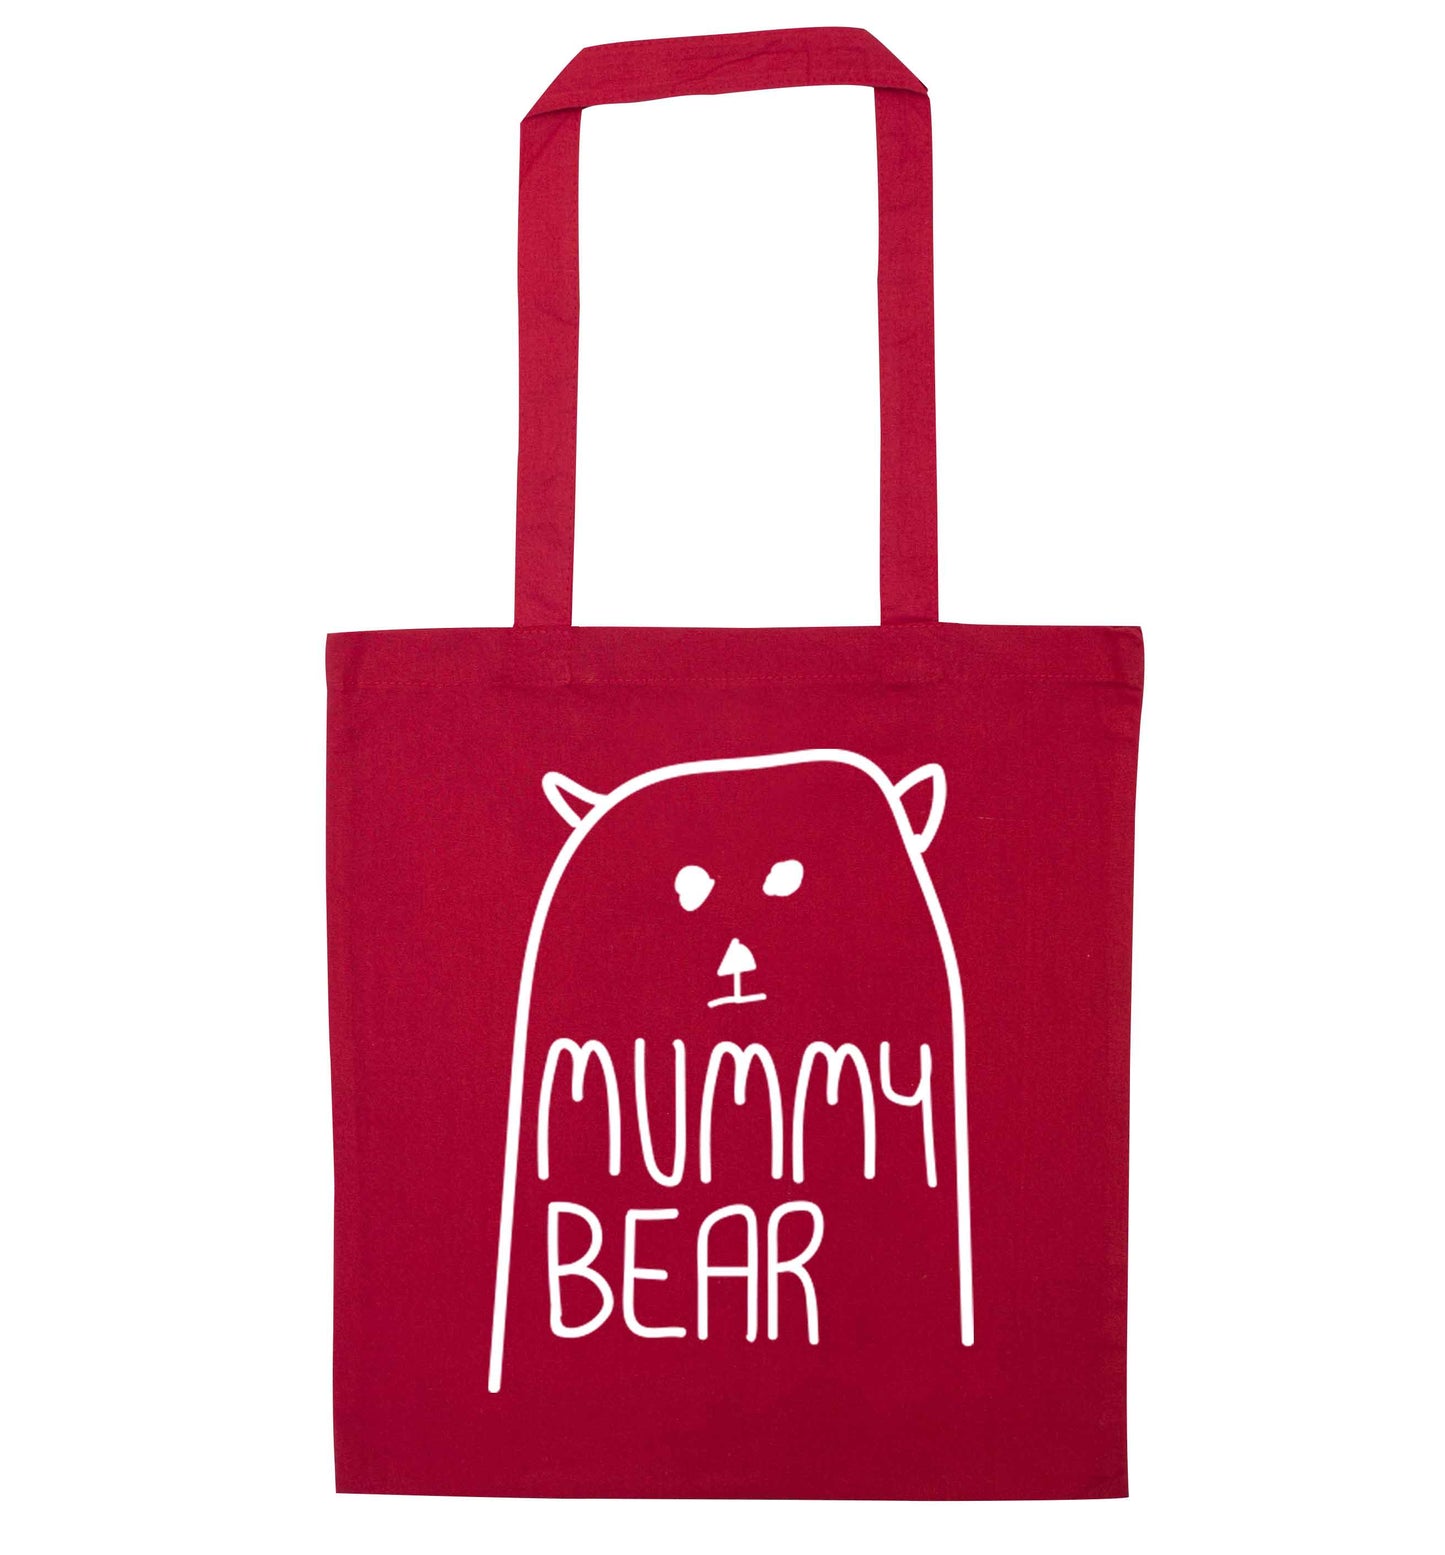 Mummy bear red tote bag